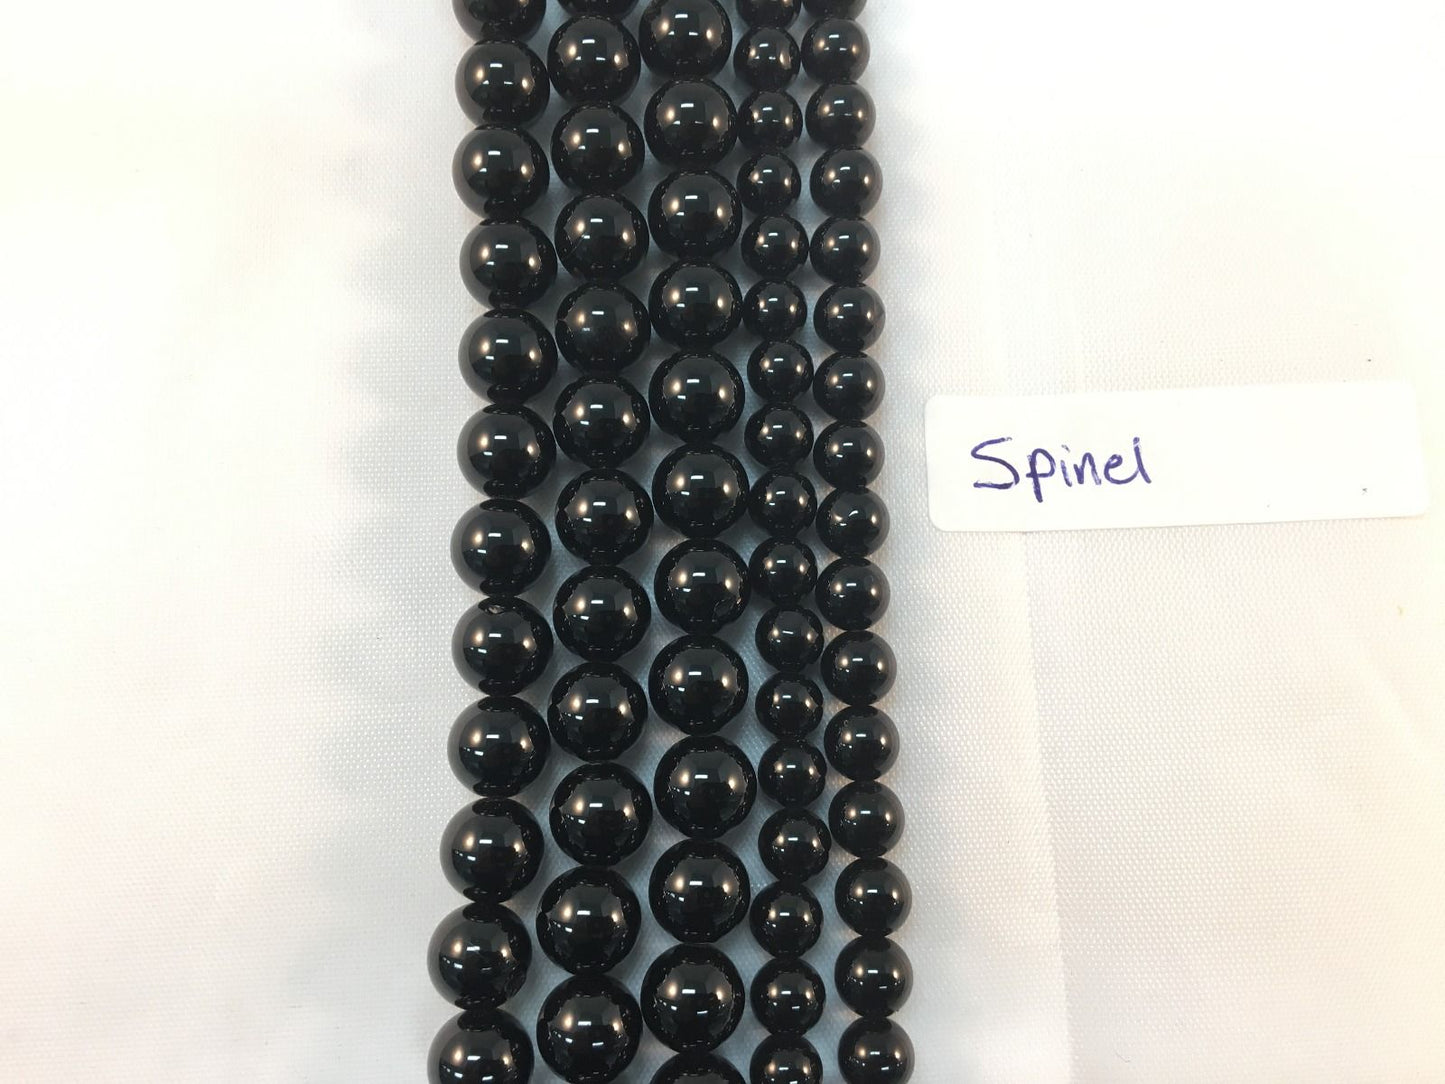 Natural Black Spinel Beads 6mm